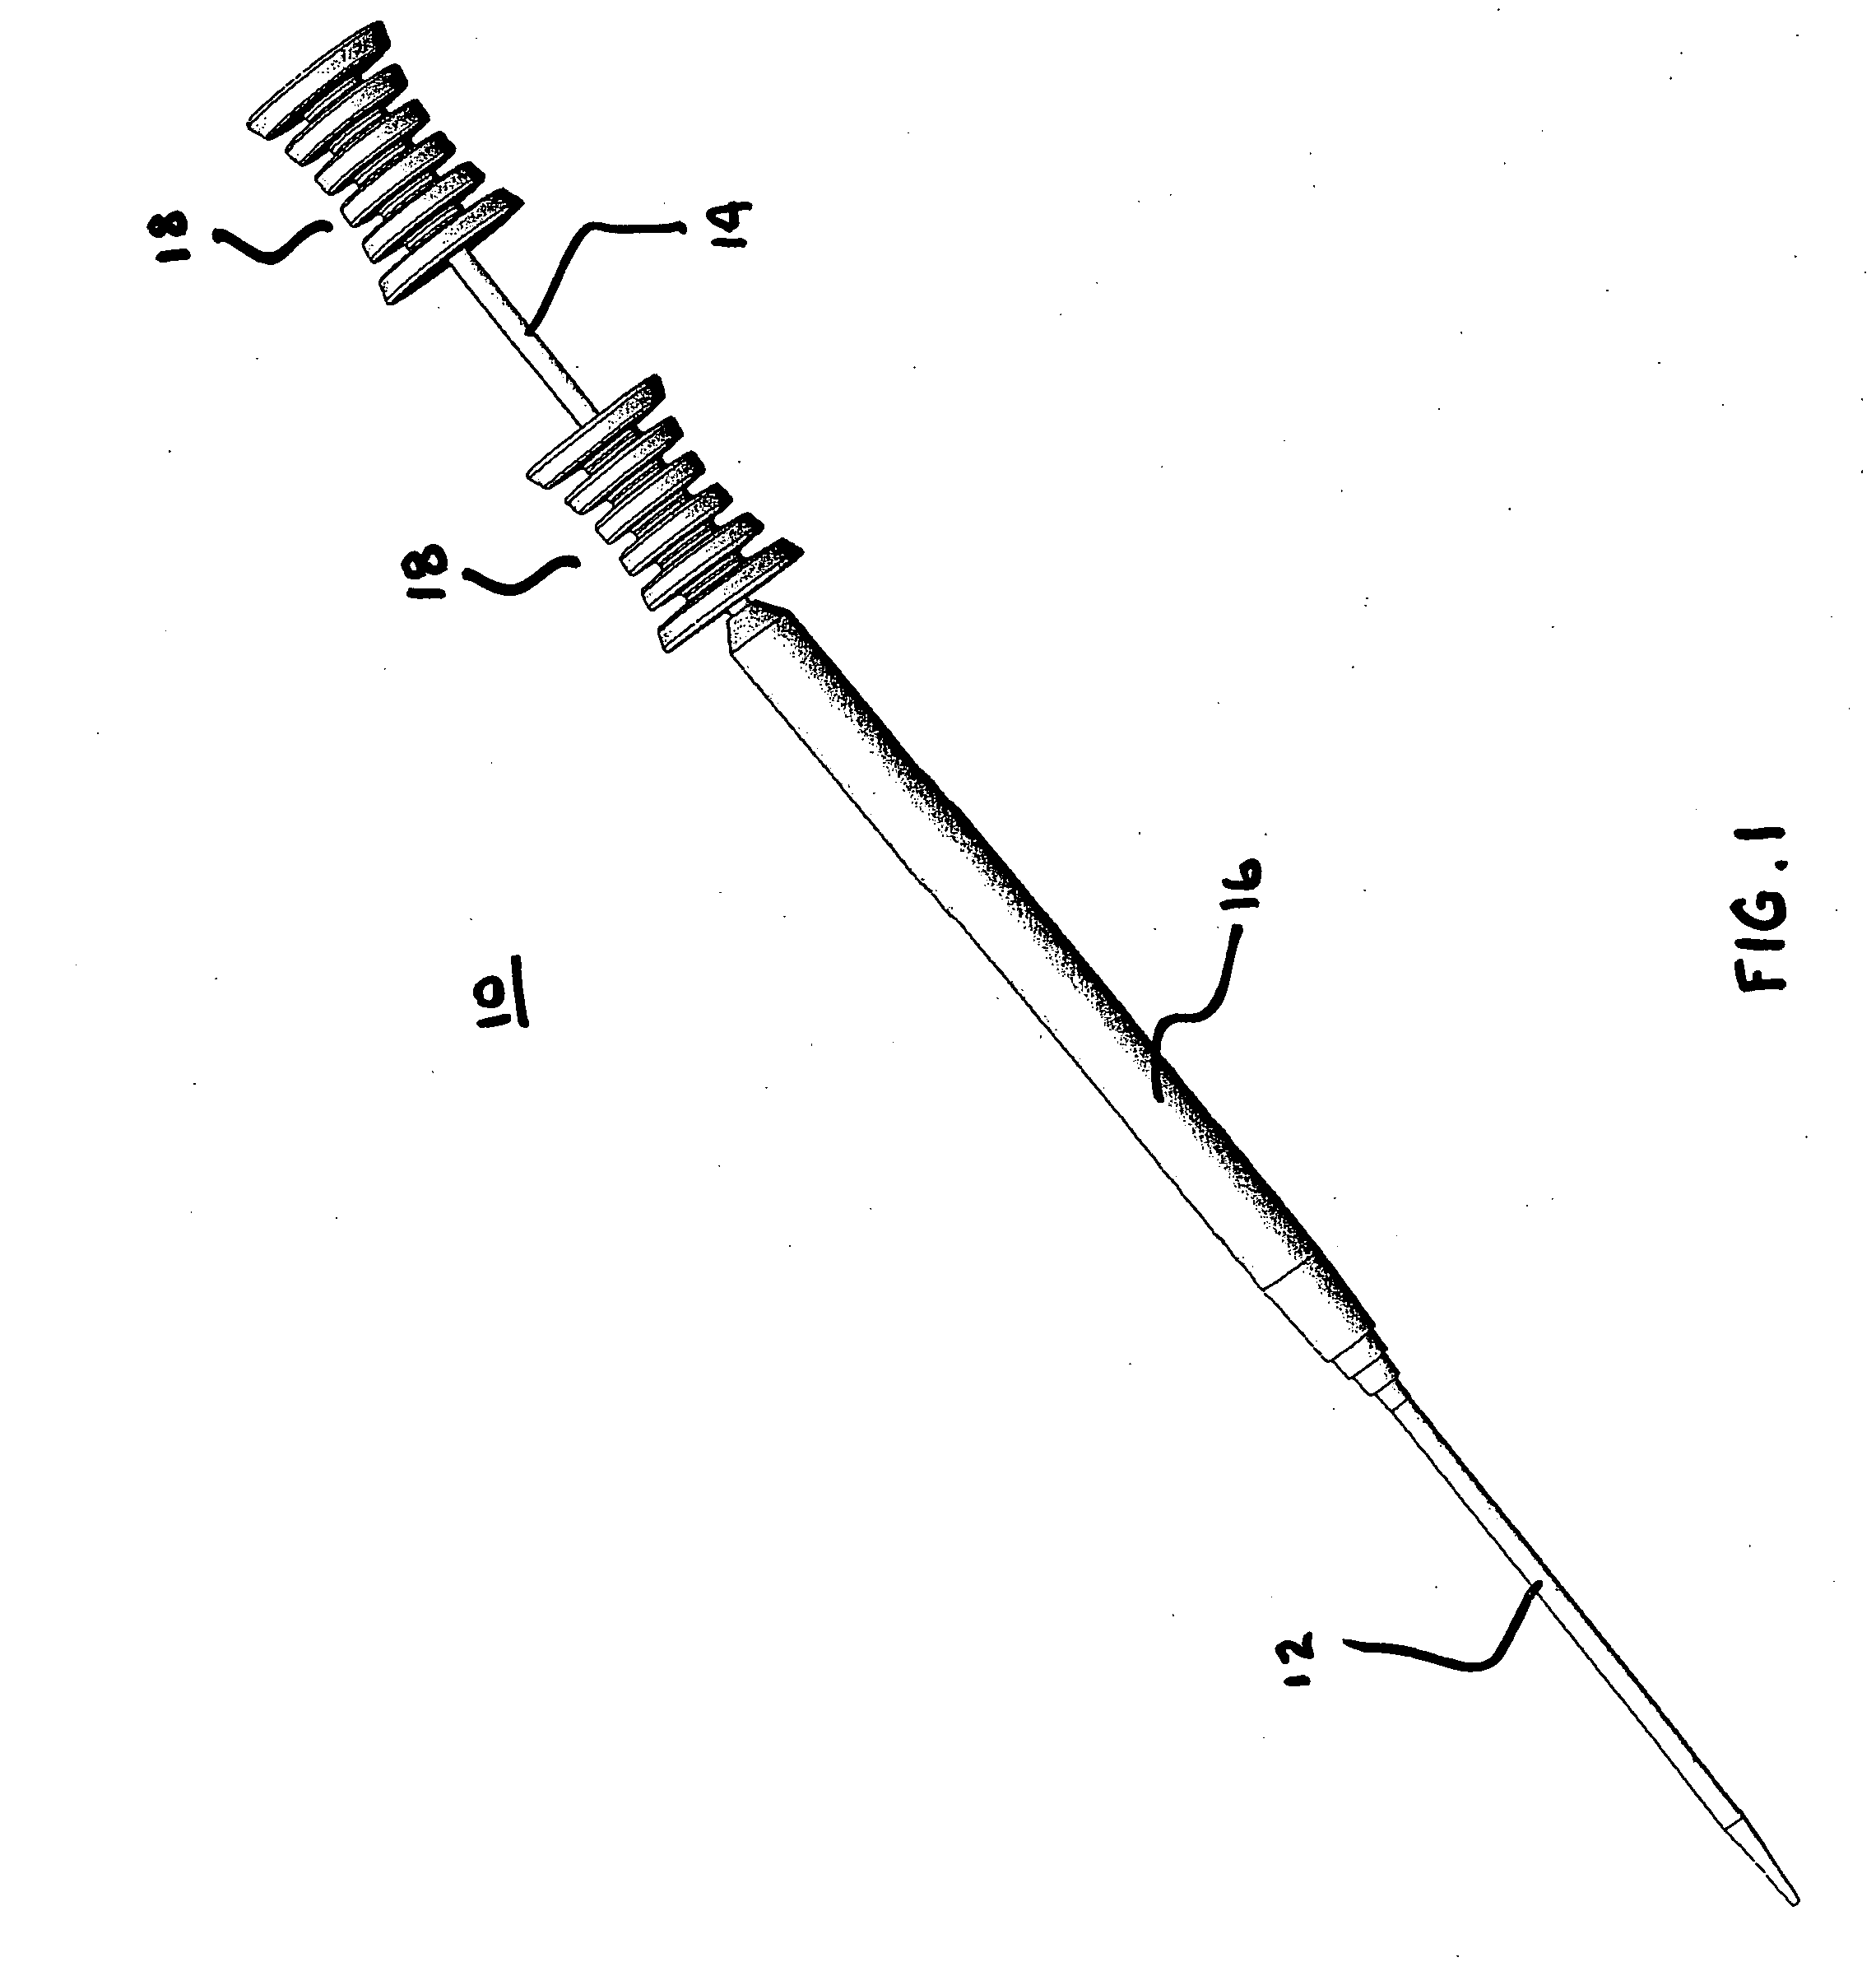 Percutaneous dilation apparatus